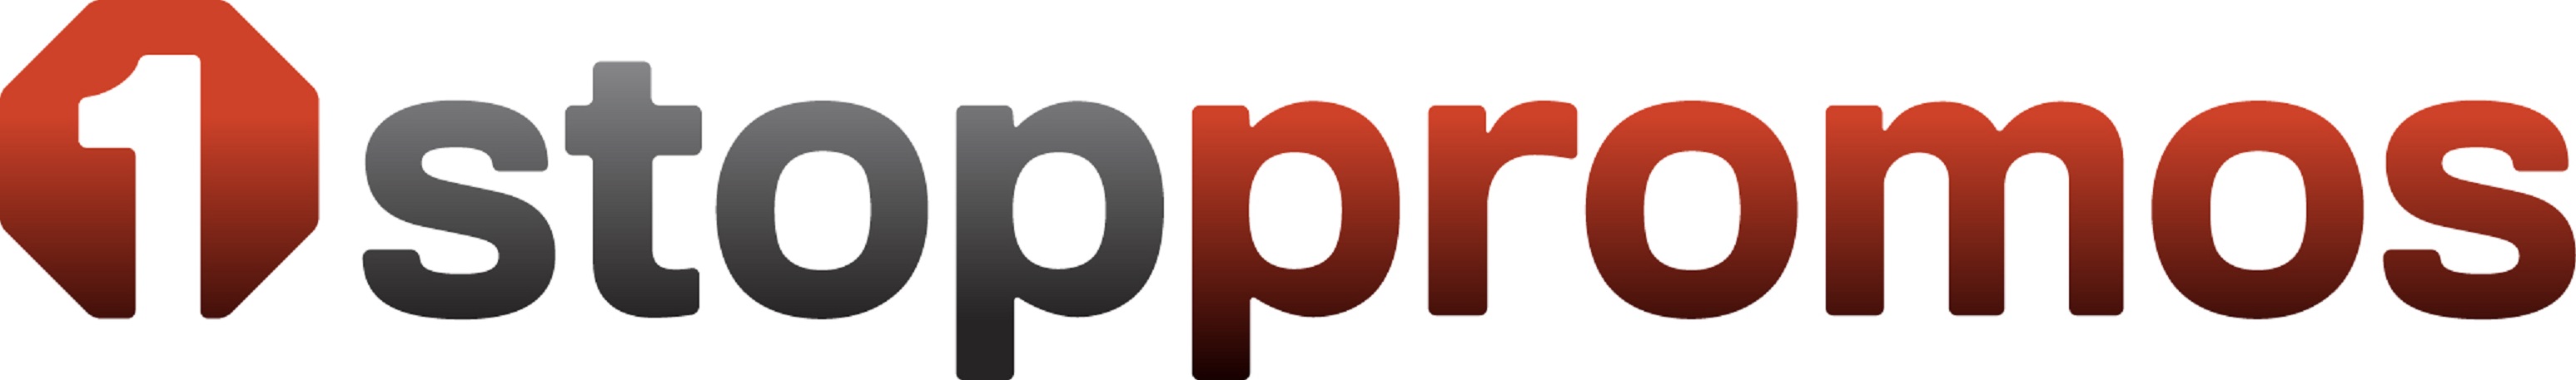 1 Stop Promos's Logo